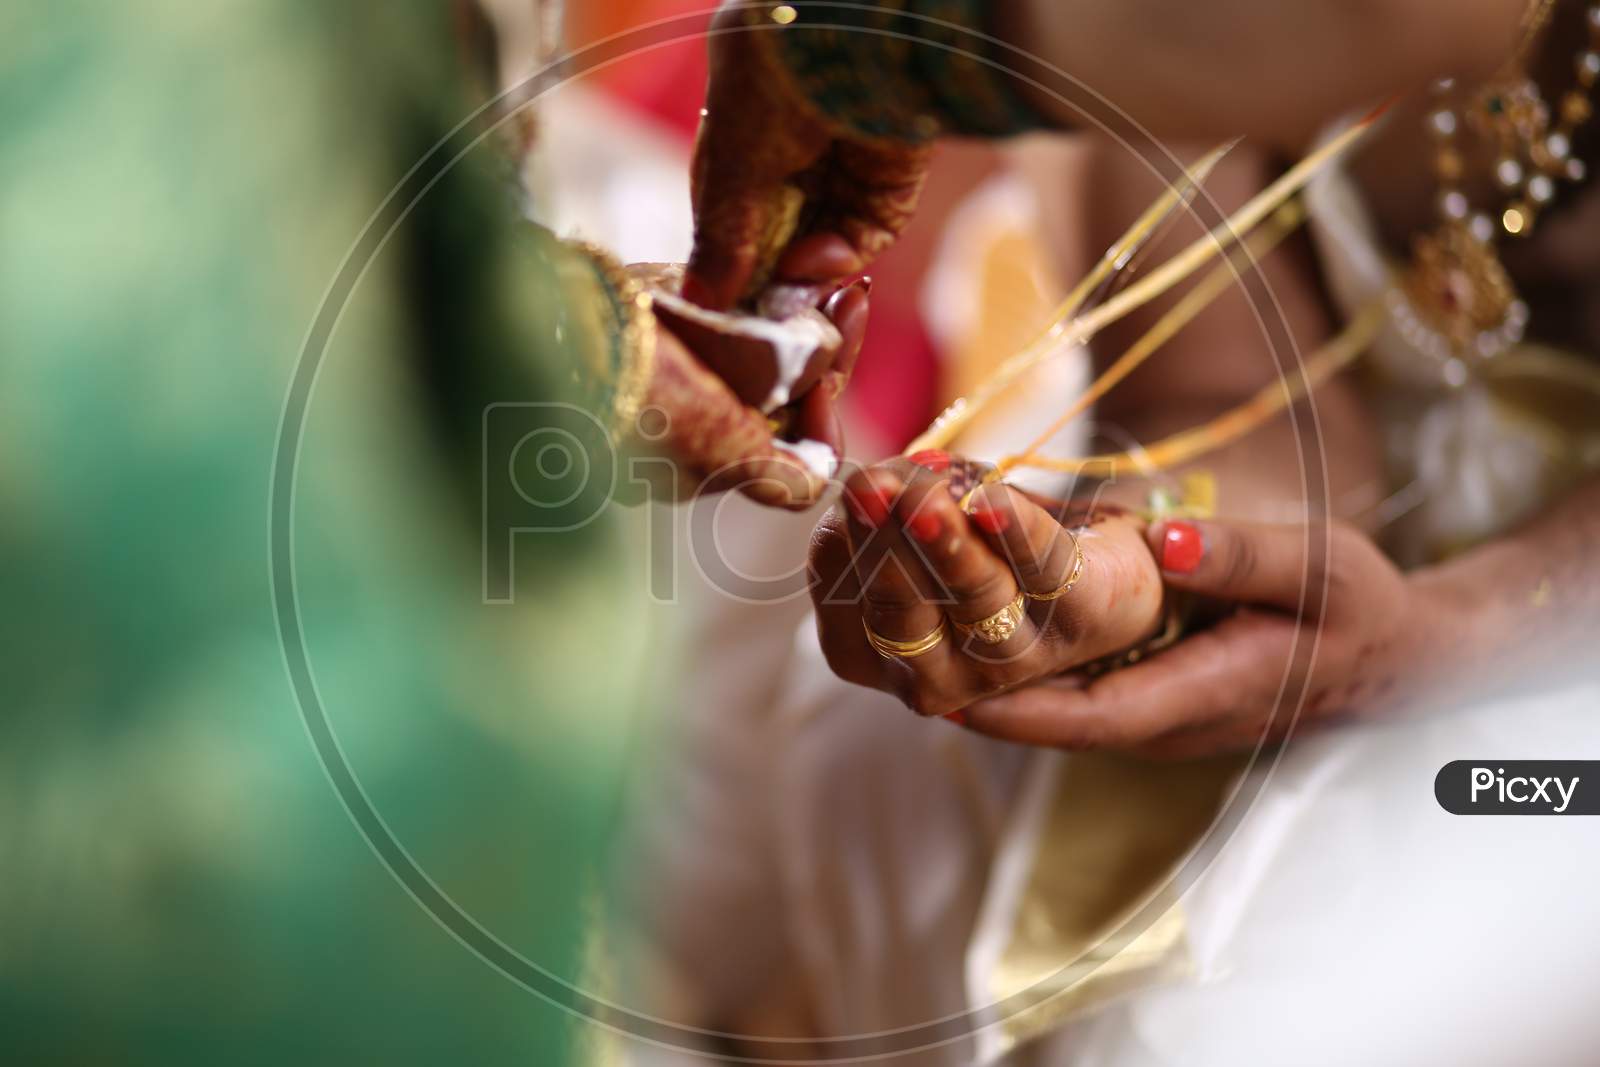 Indian Mangalsutra puja during wedding